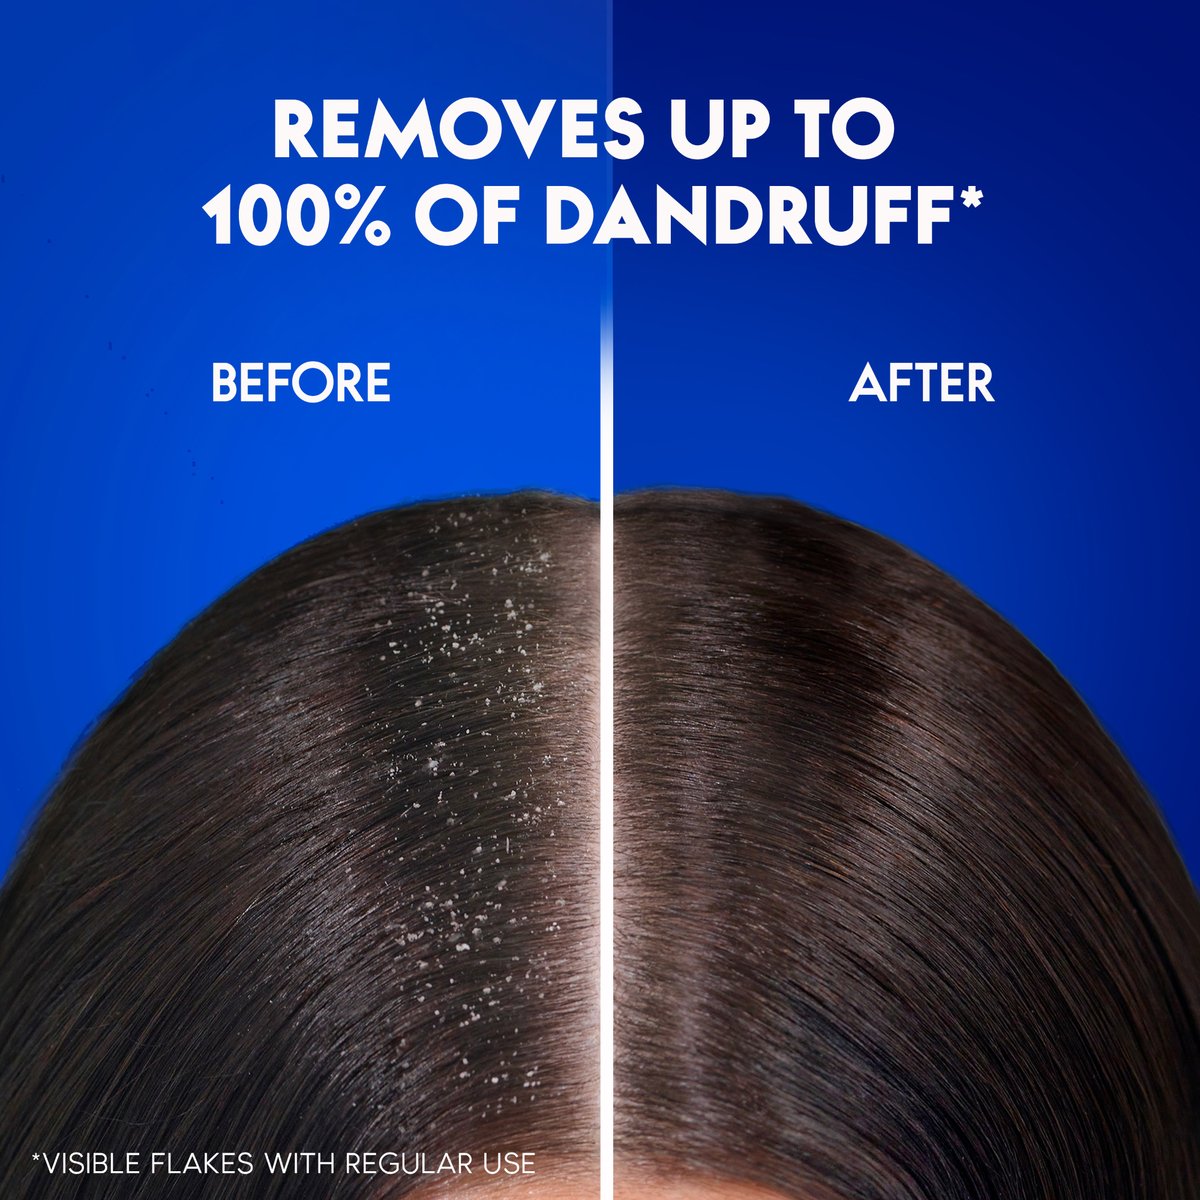 Head & Shoulders Men Hairfall Defense Anti-Dandruff Shampoo 400 ml